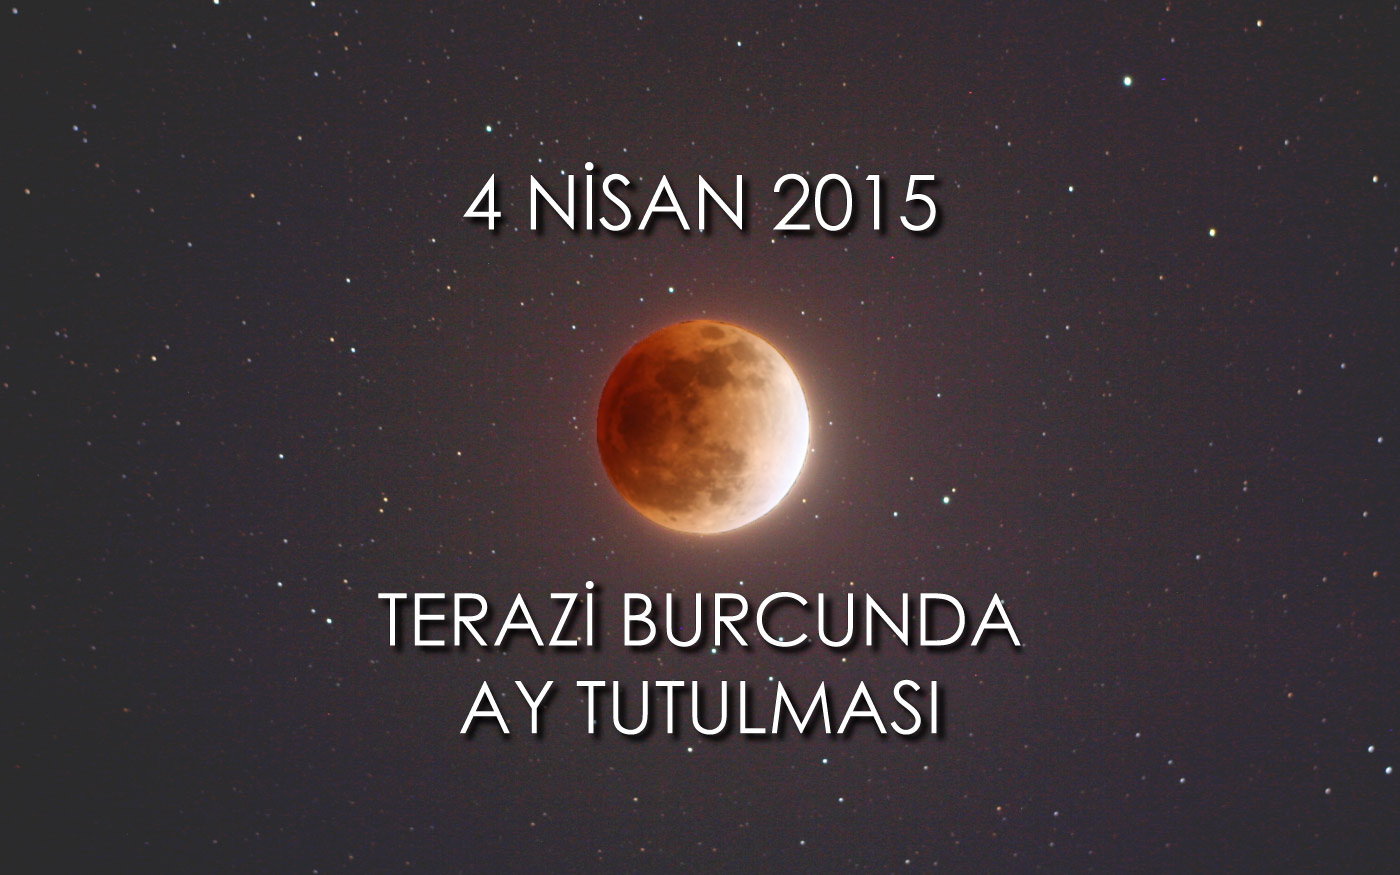 Terazi Burcunda Ay Tutulması - 4 Nisan 2015